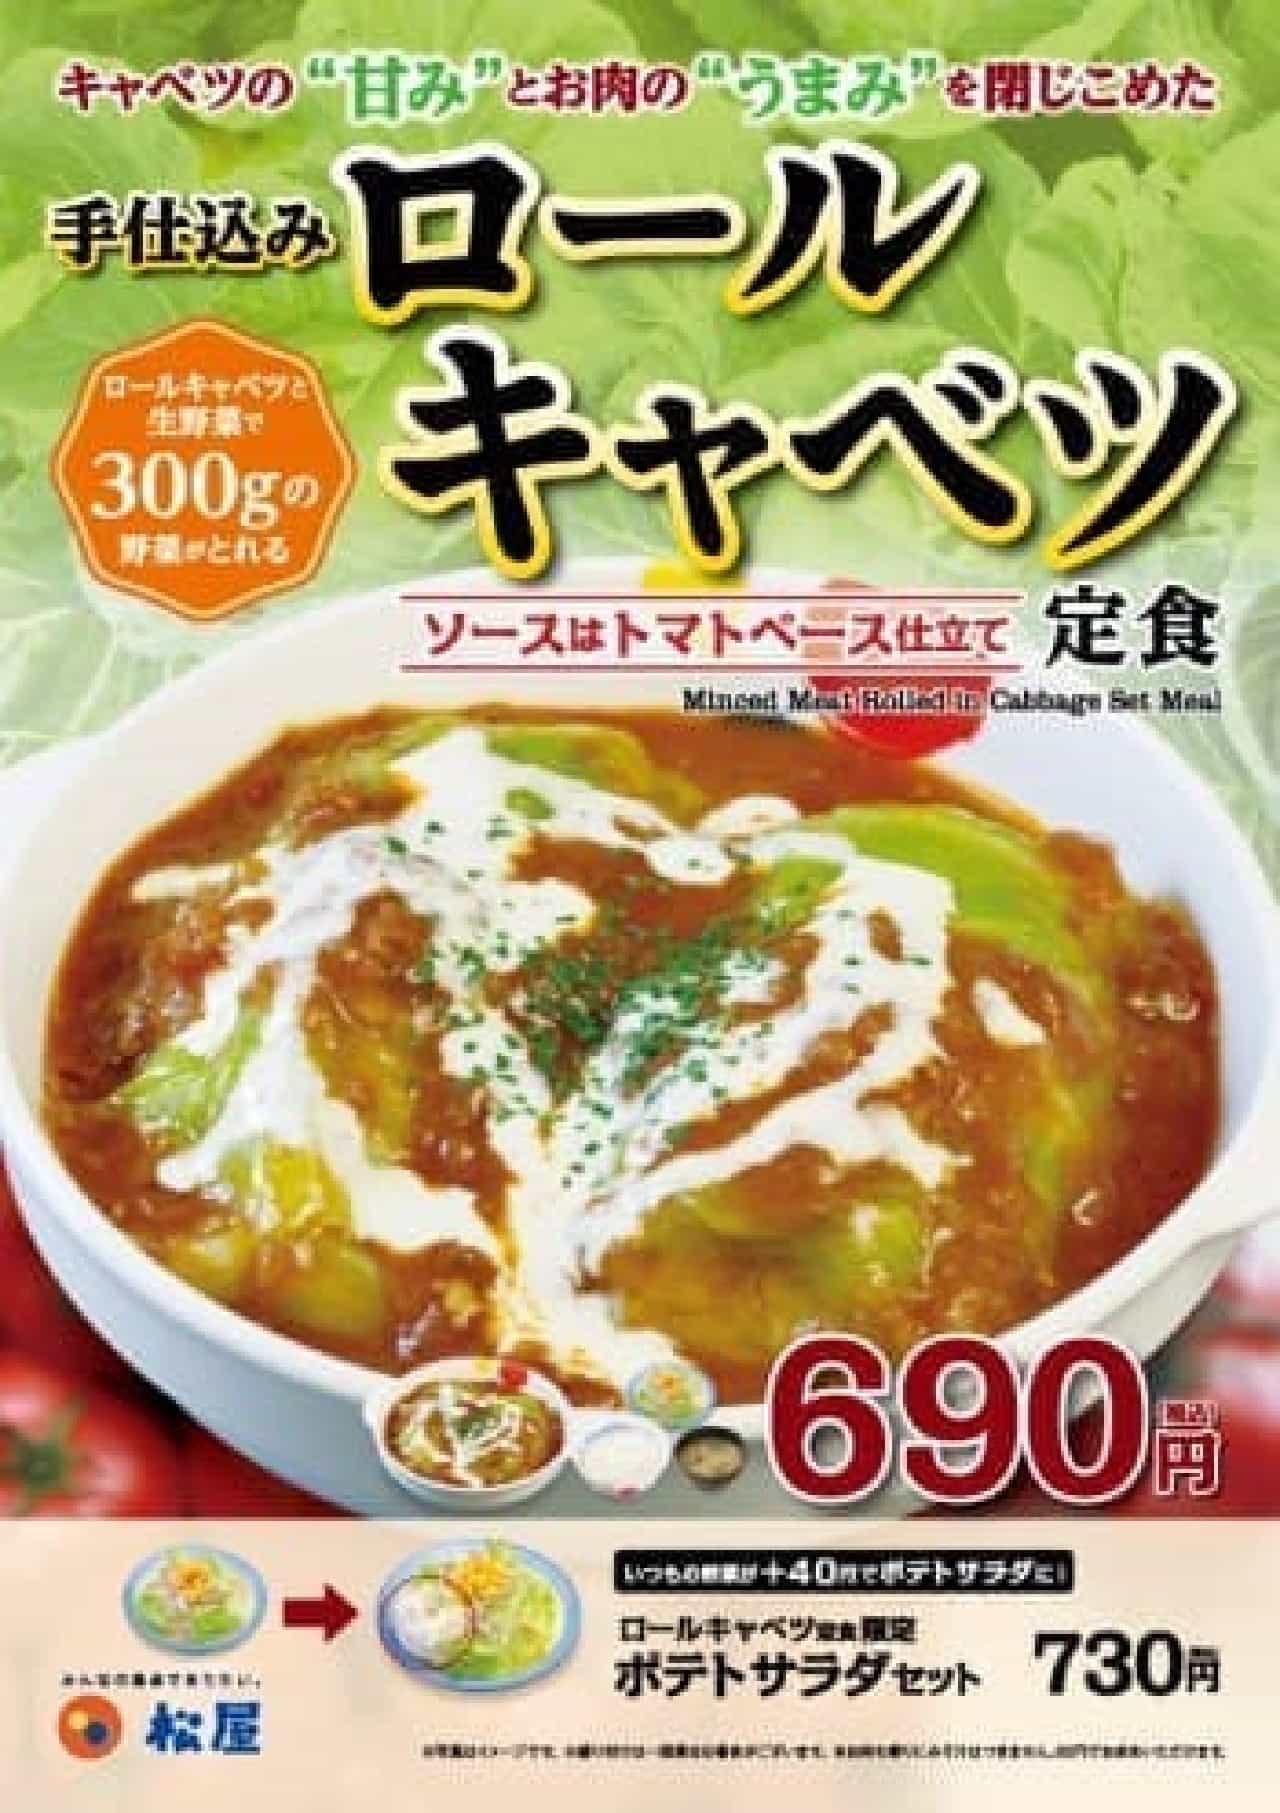 Matsuya "Roll cabbage set meal"